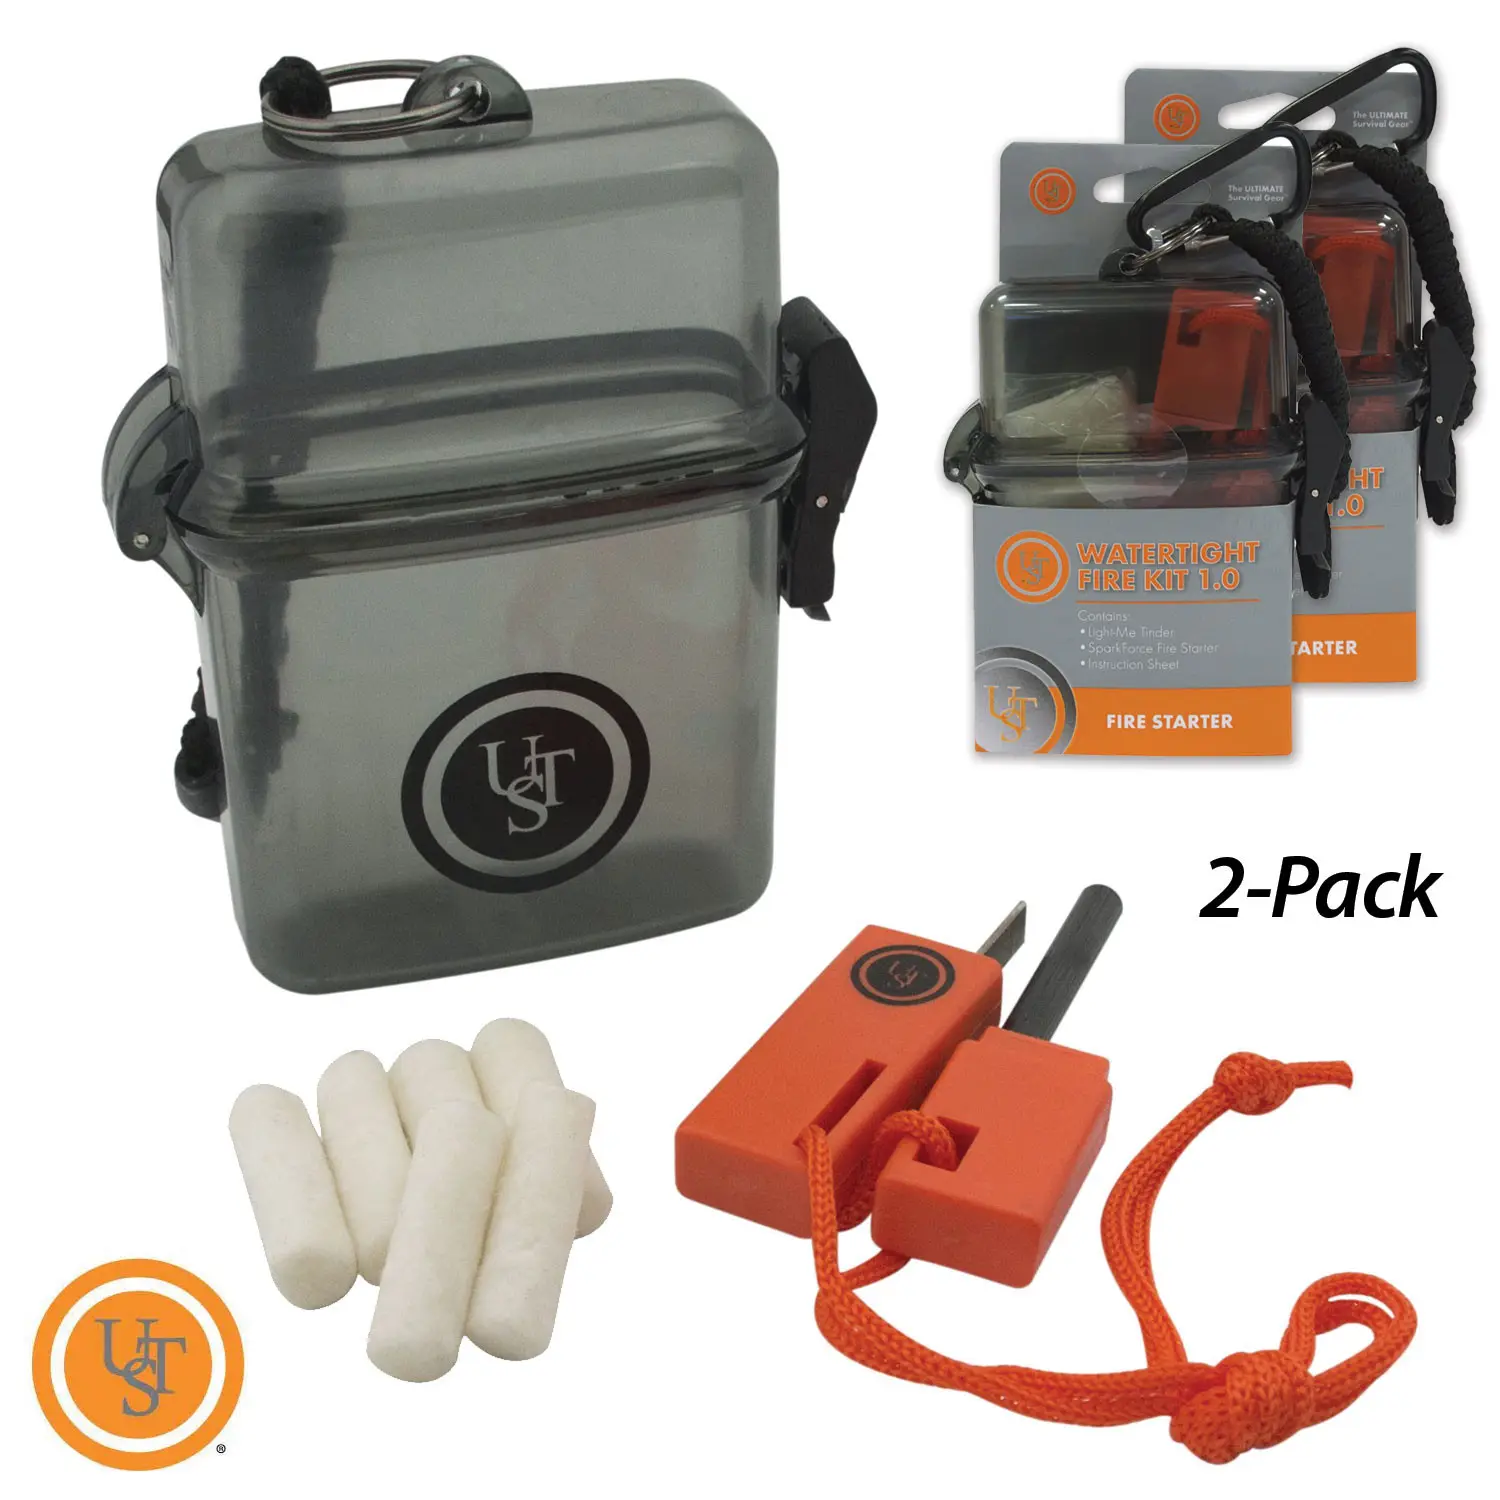 2-Pack UST Ultimate Survival Technologies Watertight Fire Kit